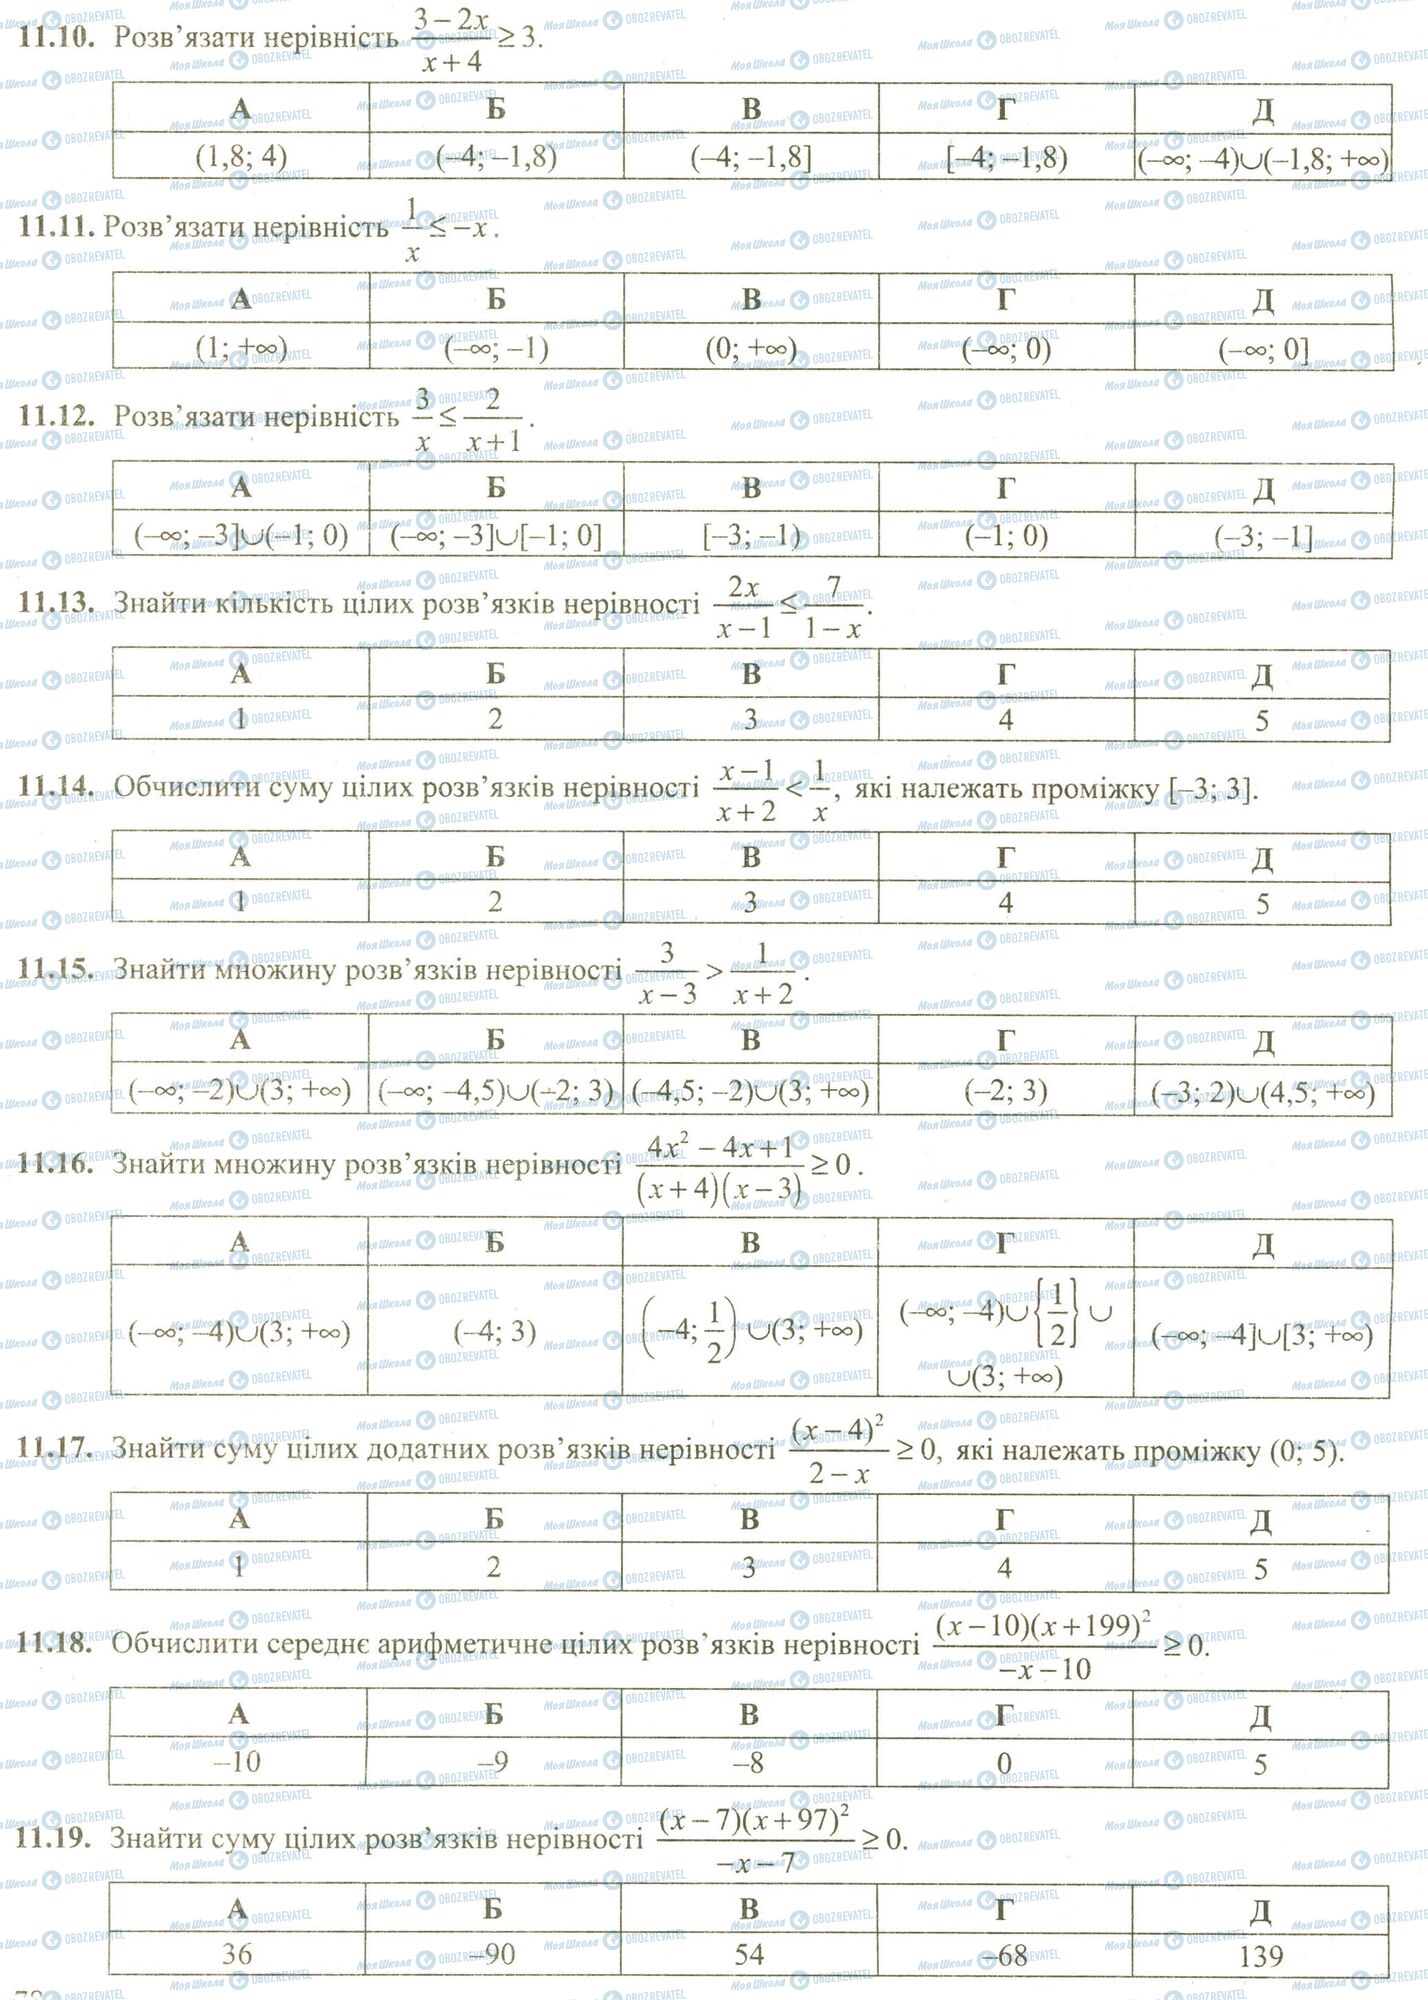 ЗНО Математика 11 класс страница 10-19